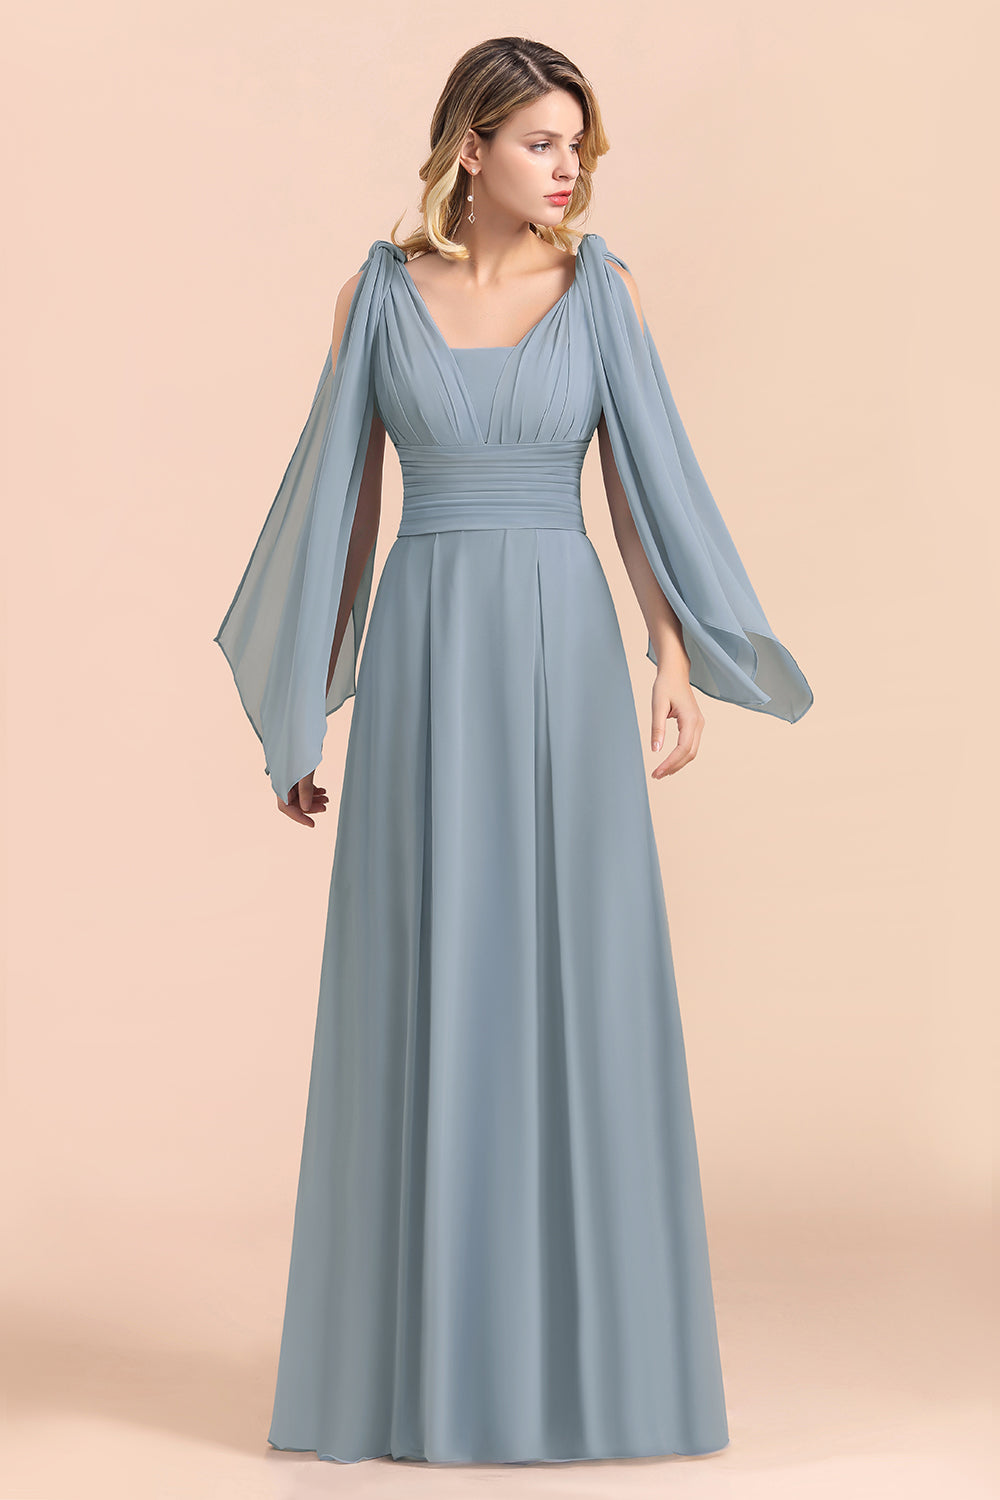 Affordable Dusty Blue Ruffle Convertible Bridemsiad Dress-27dress